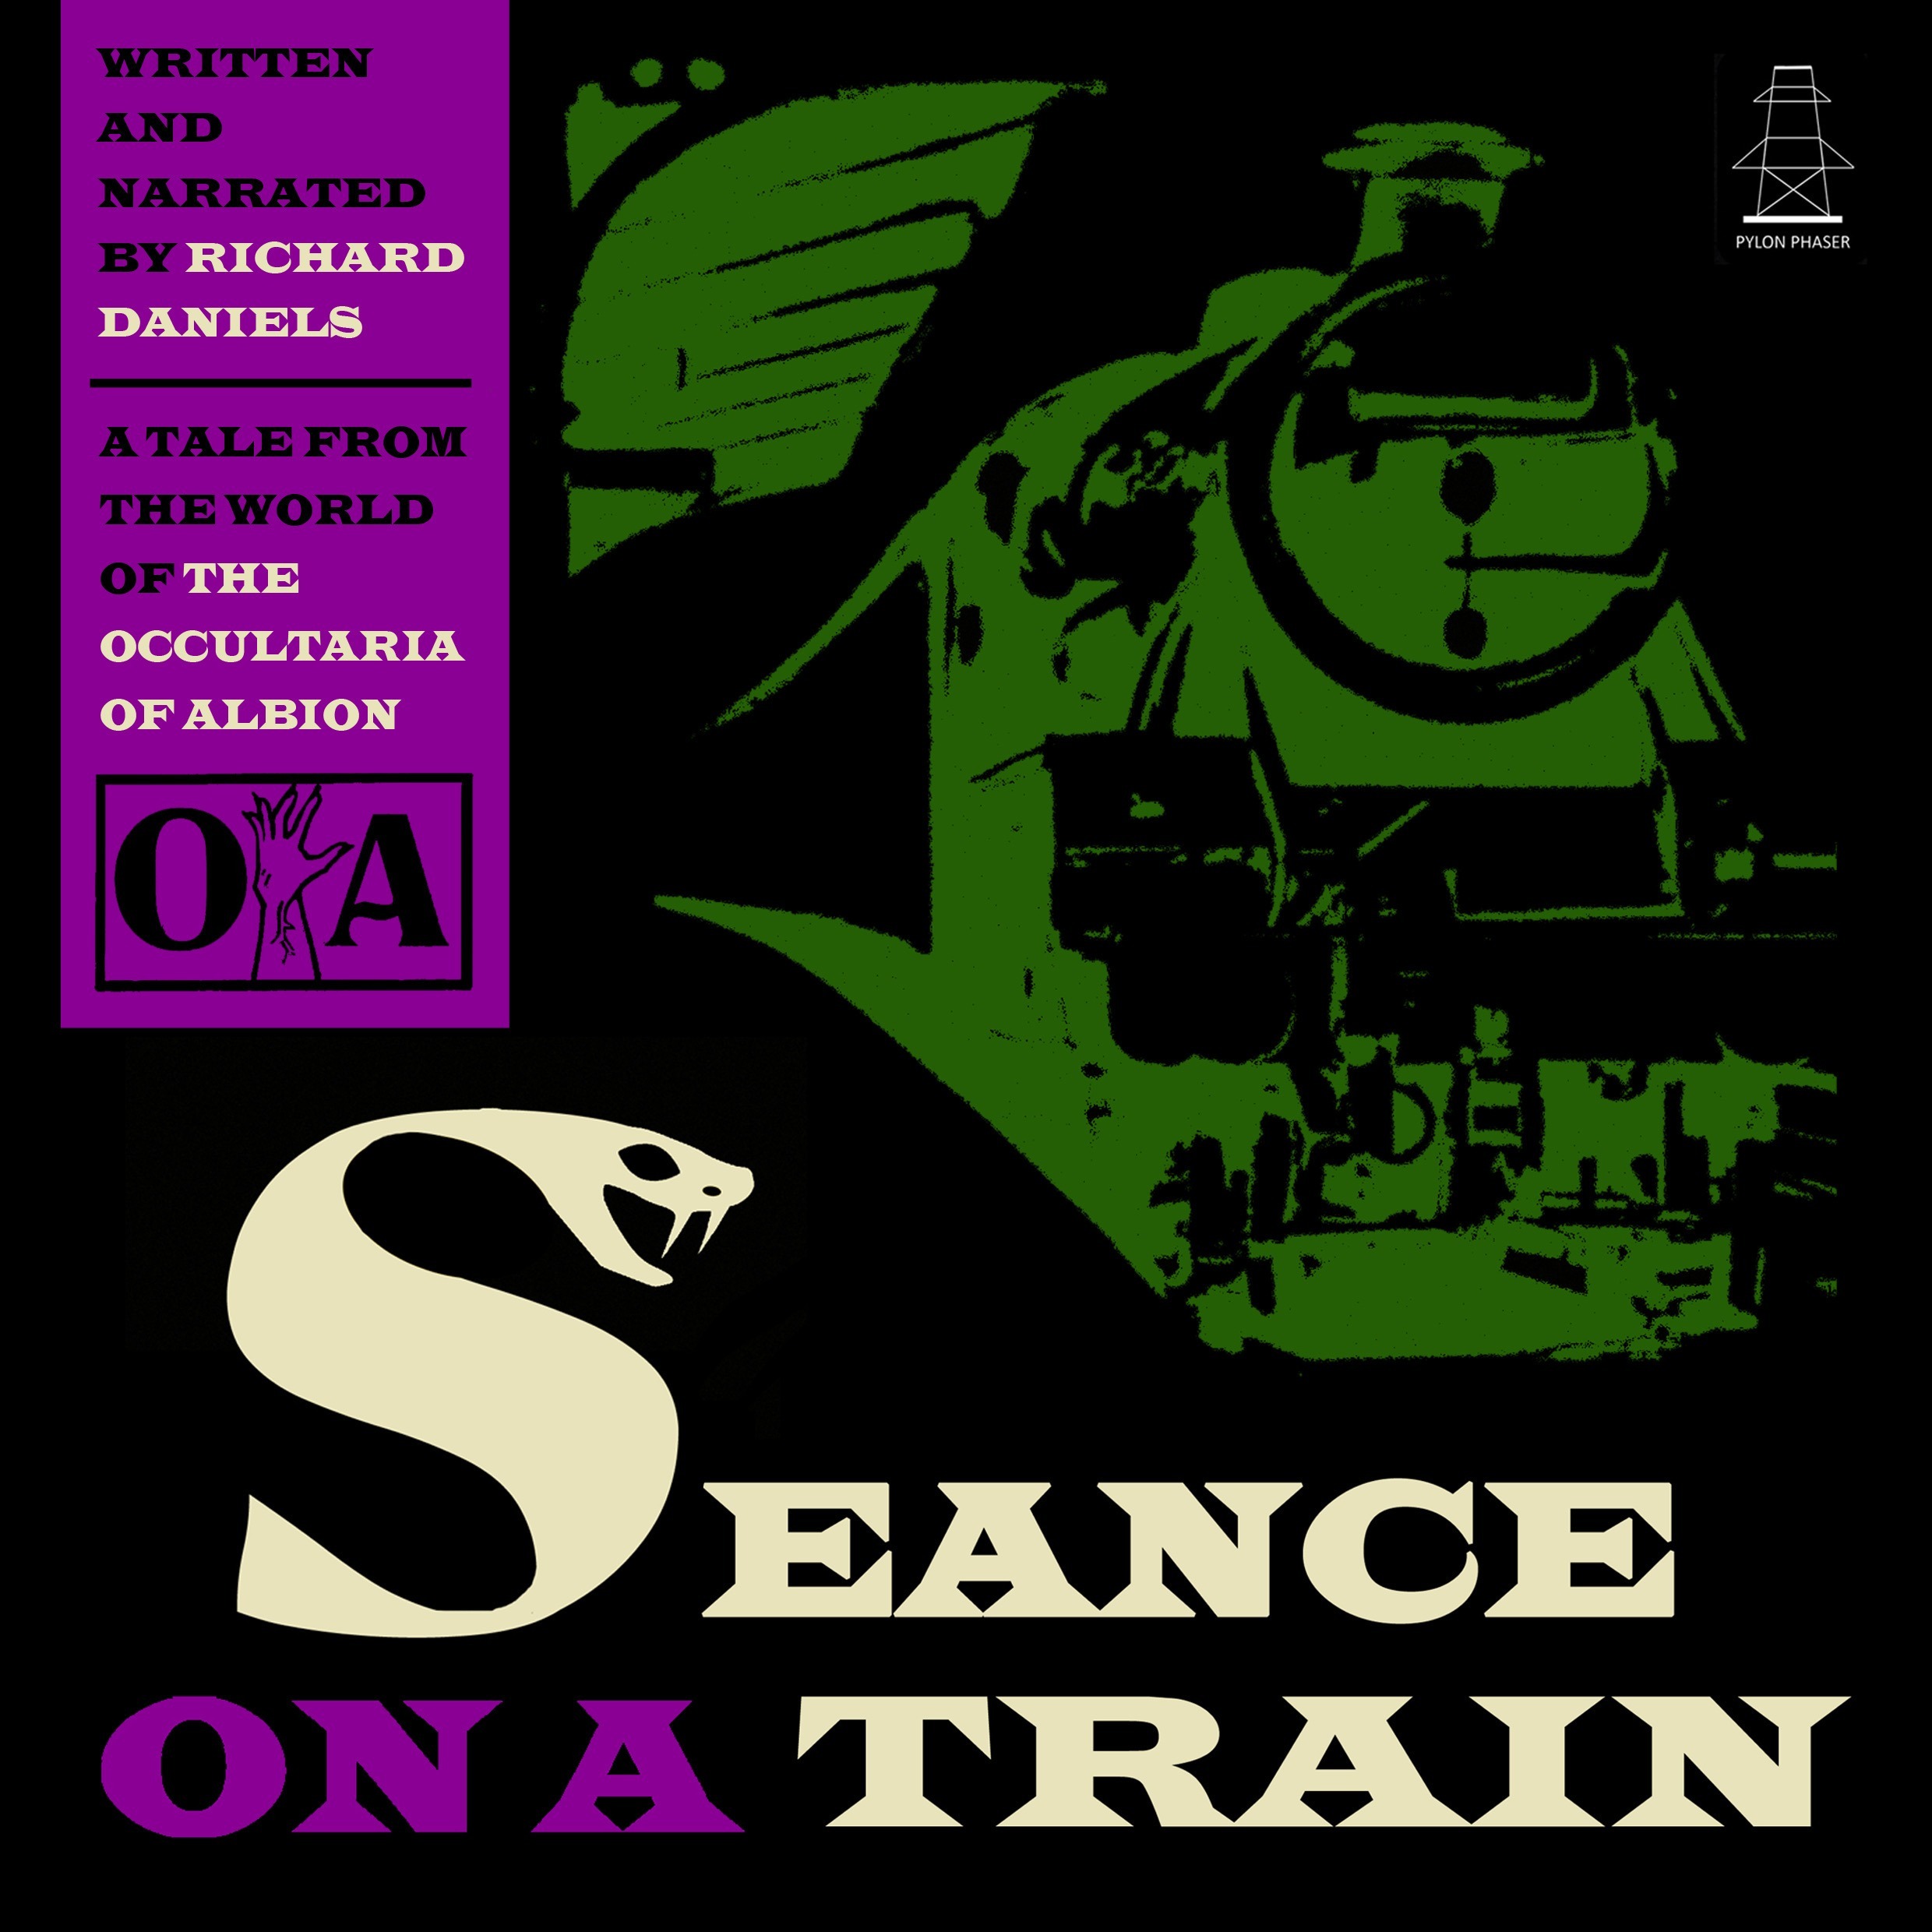 Audio Tale: Seance On A Train